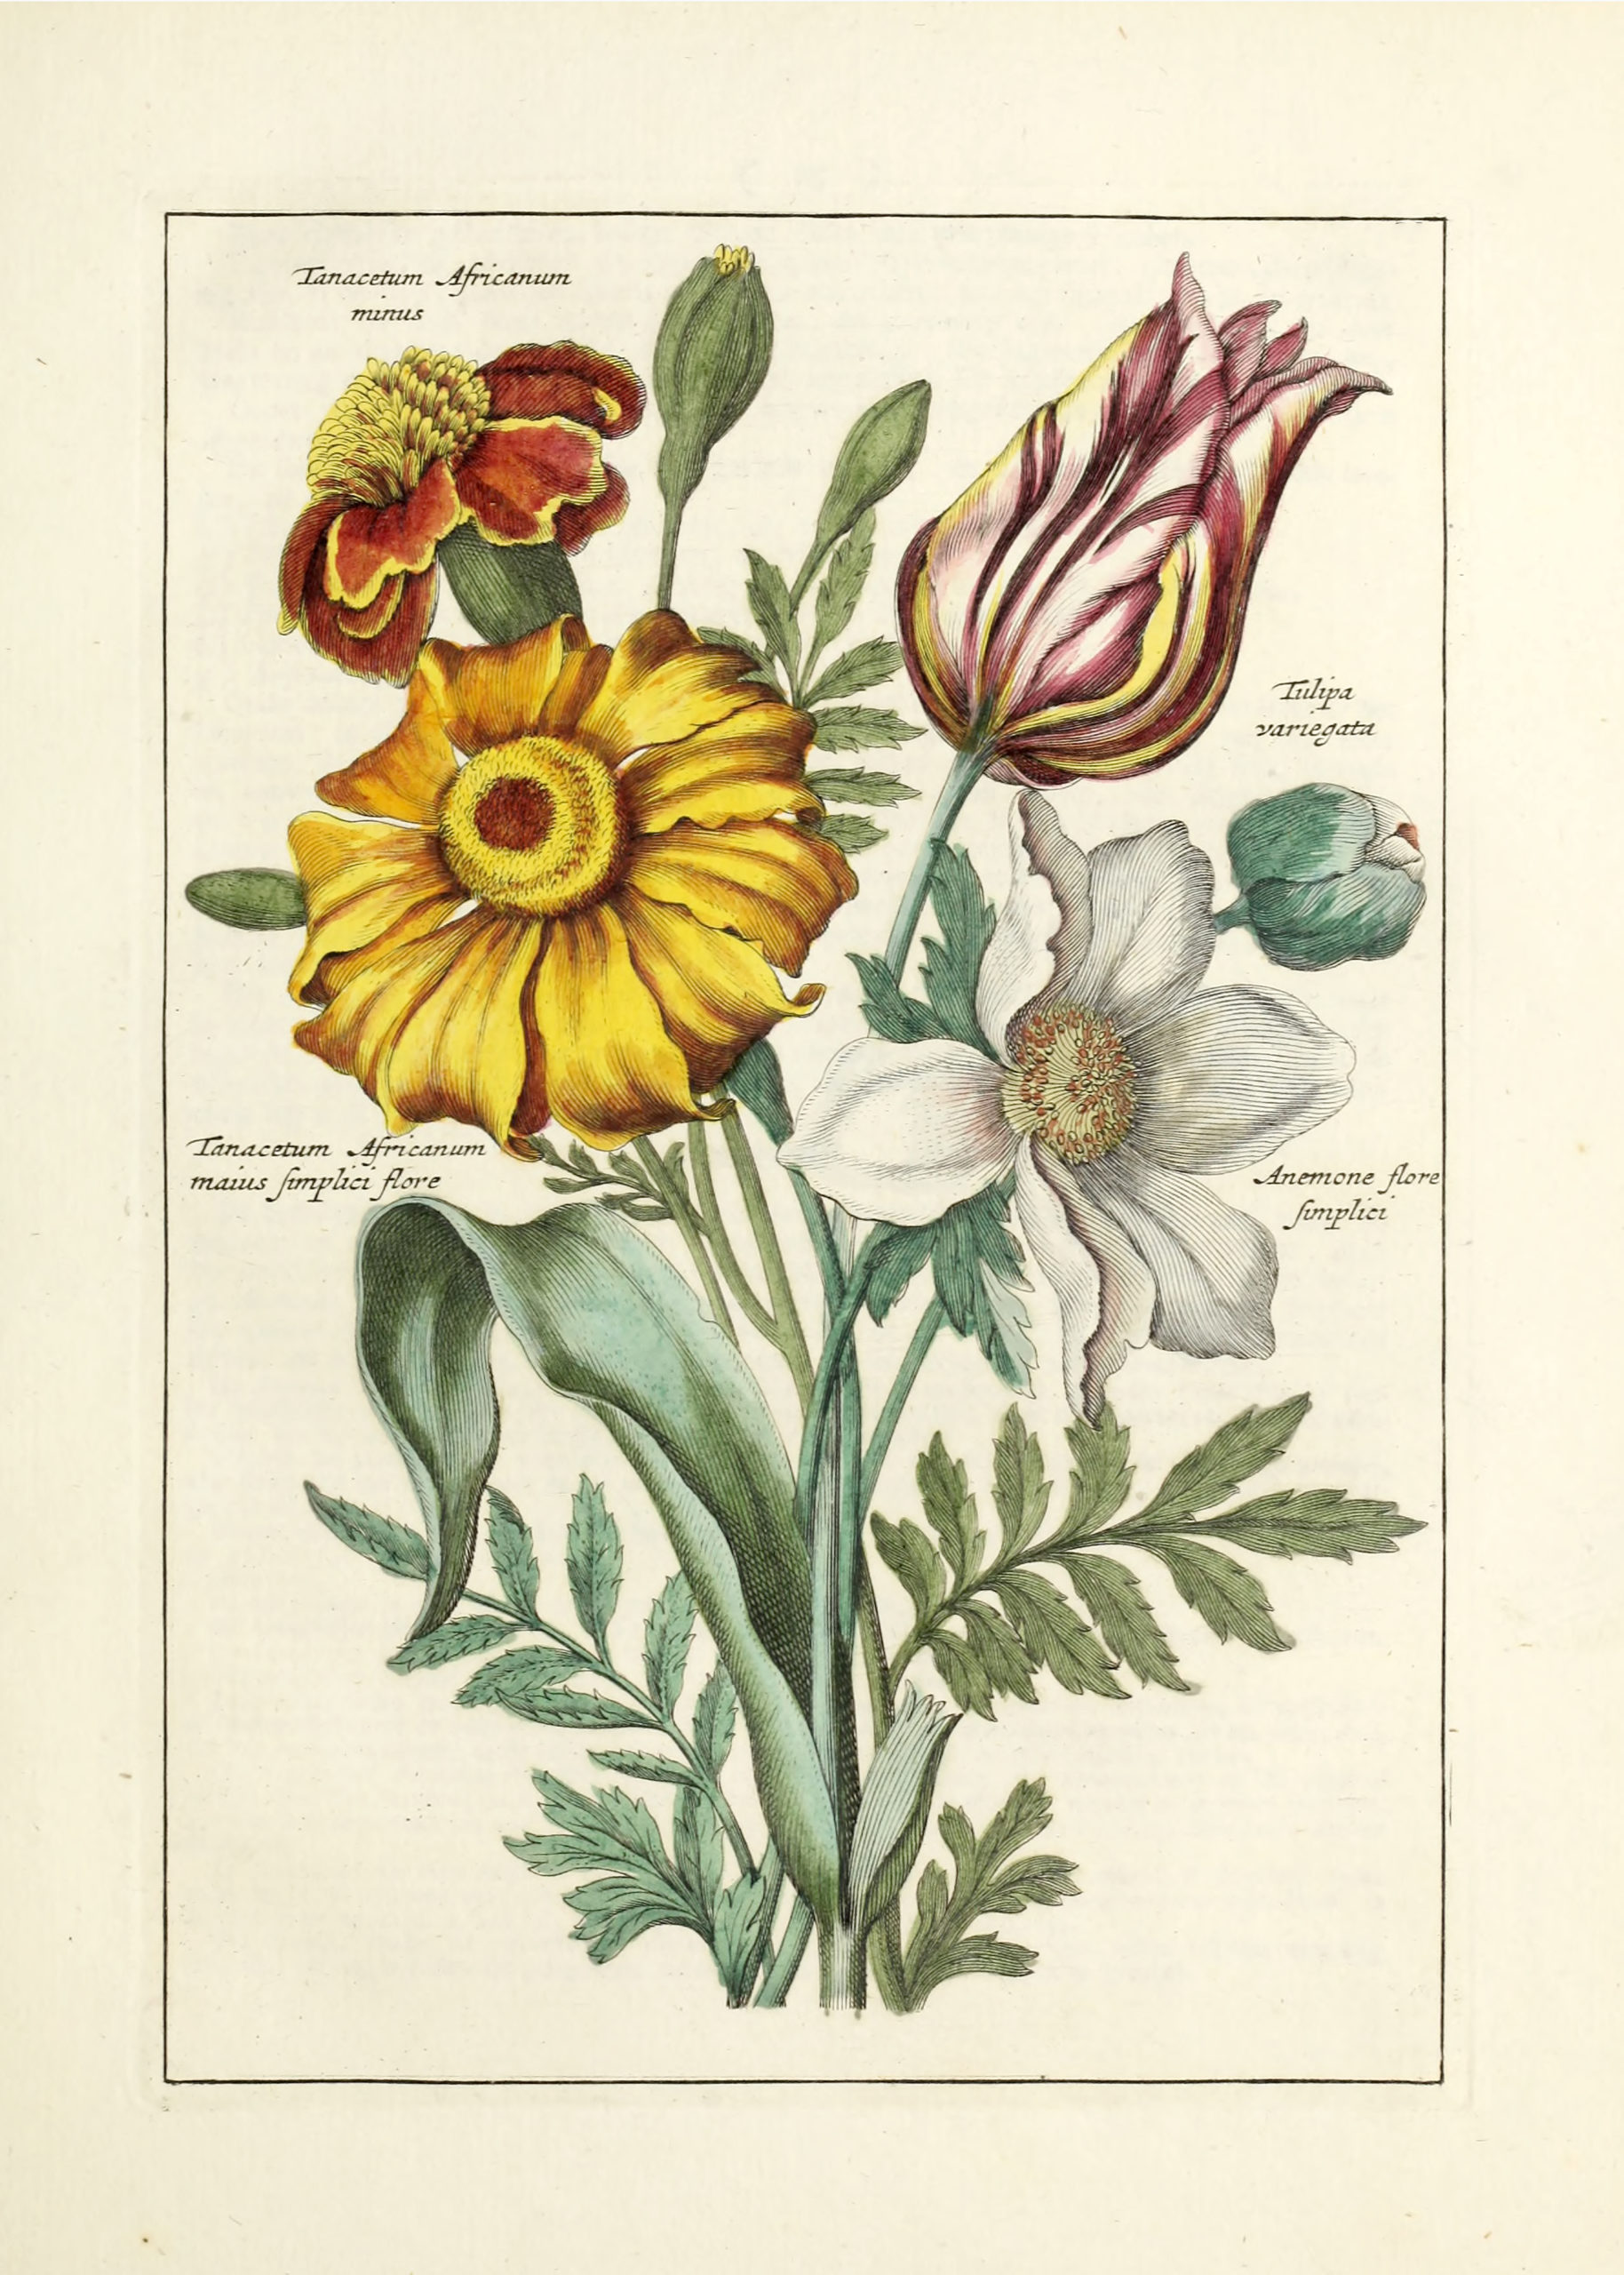 Vintage Botanical Prints - 24 in a series - Flower arrangement from Nederlandsch bloemwerk (Dutch flower arrangements) (1794)